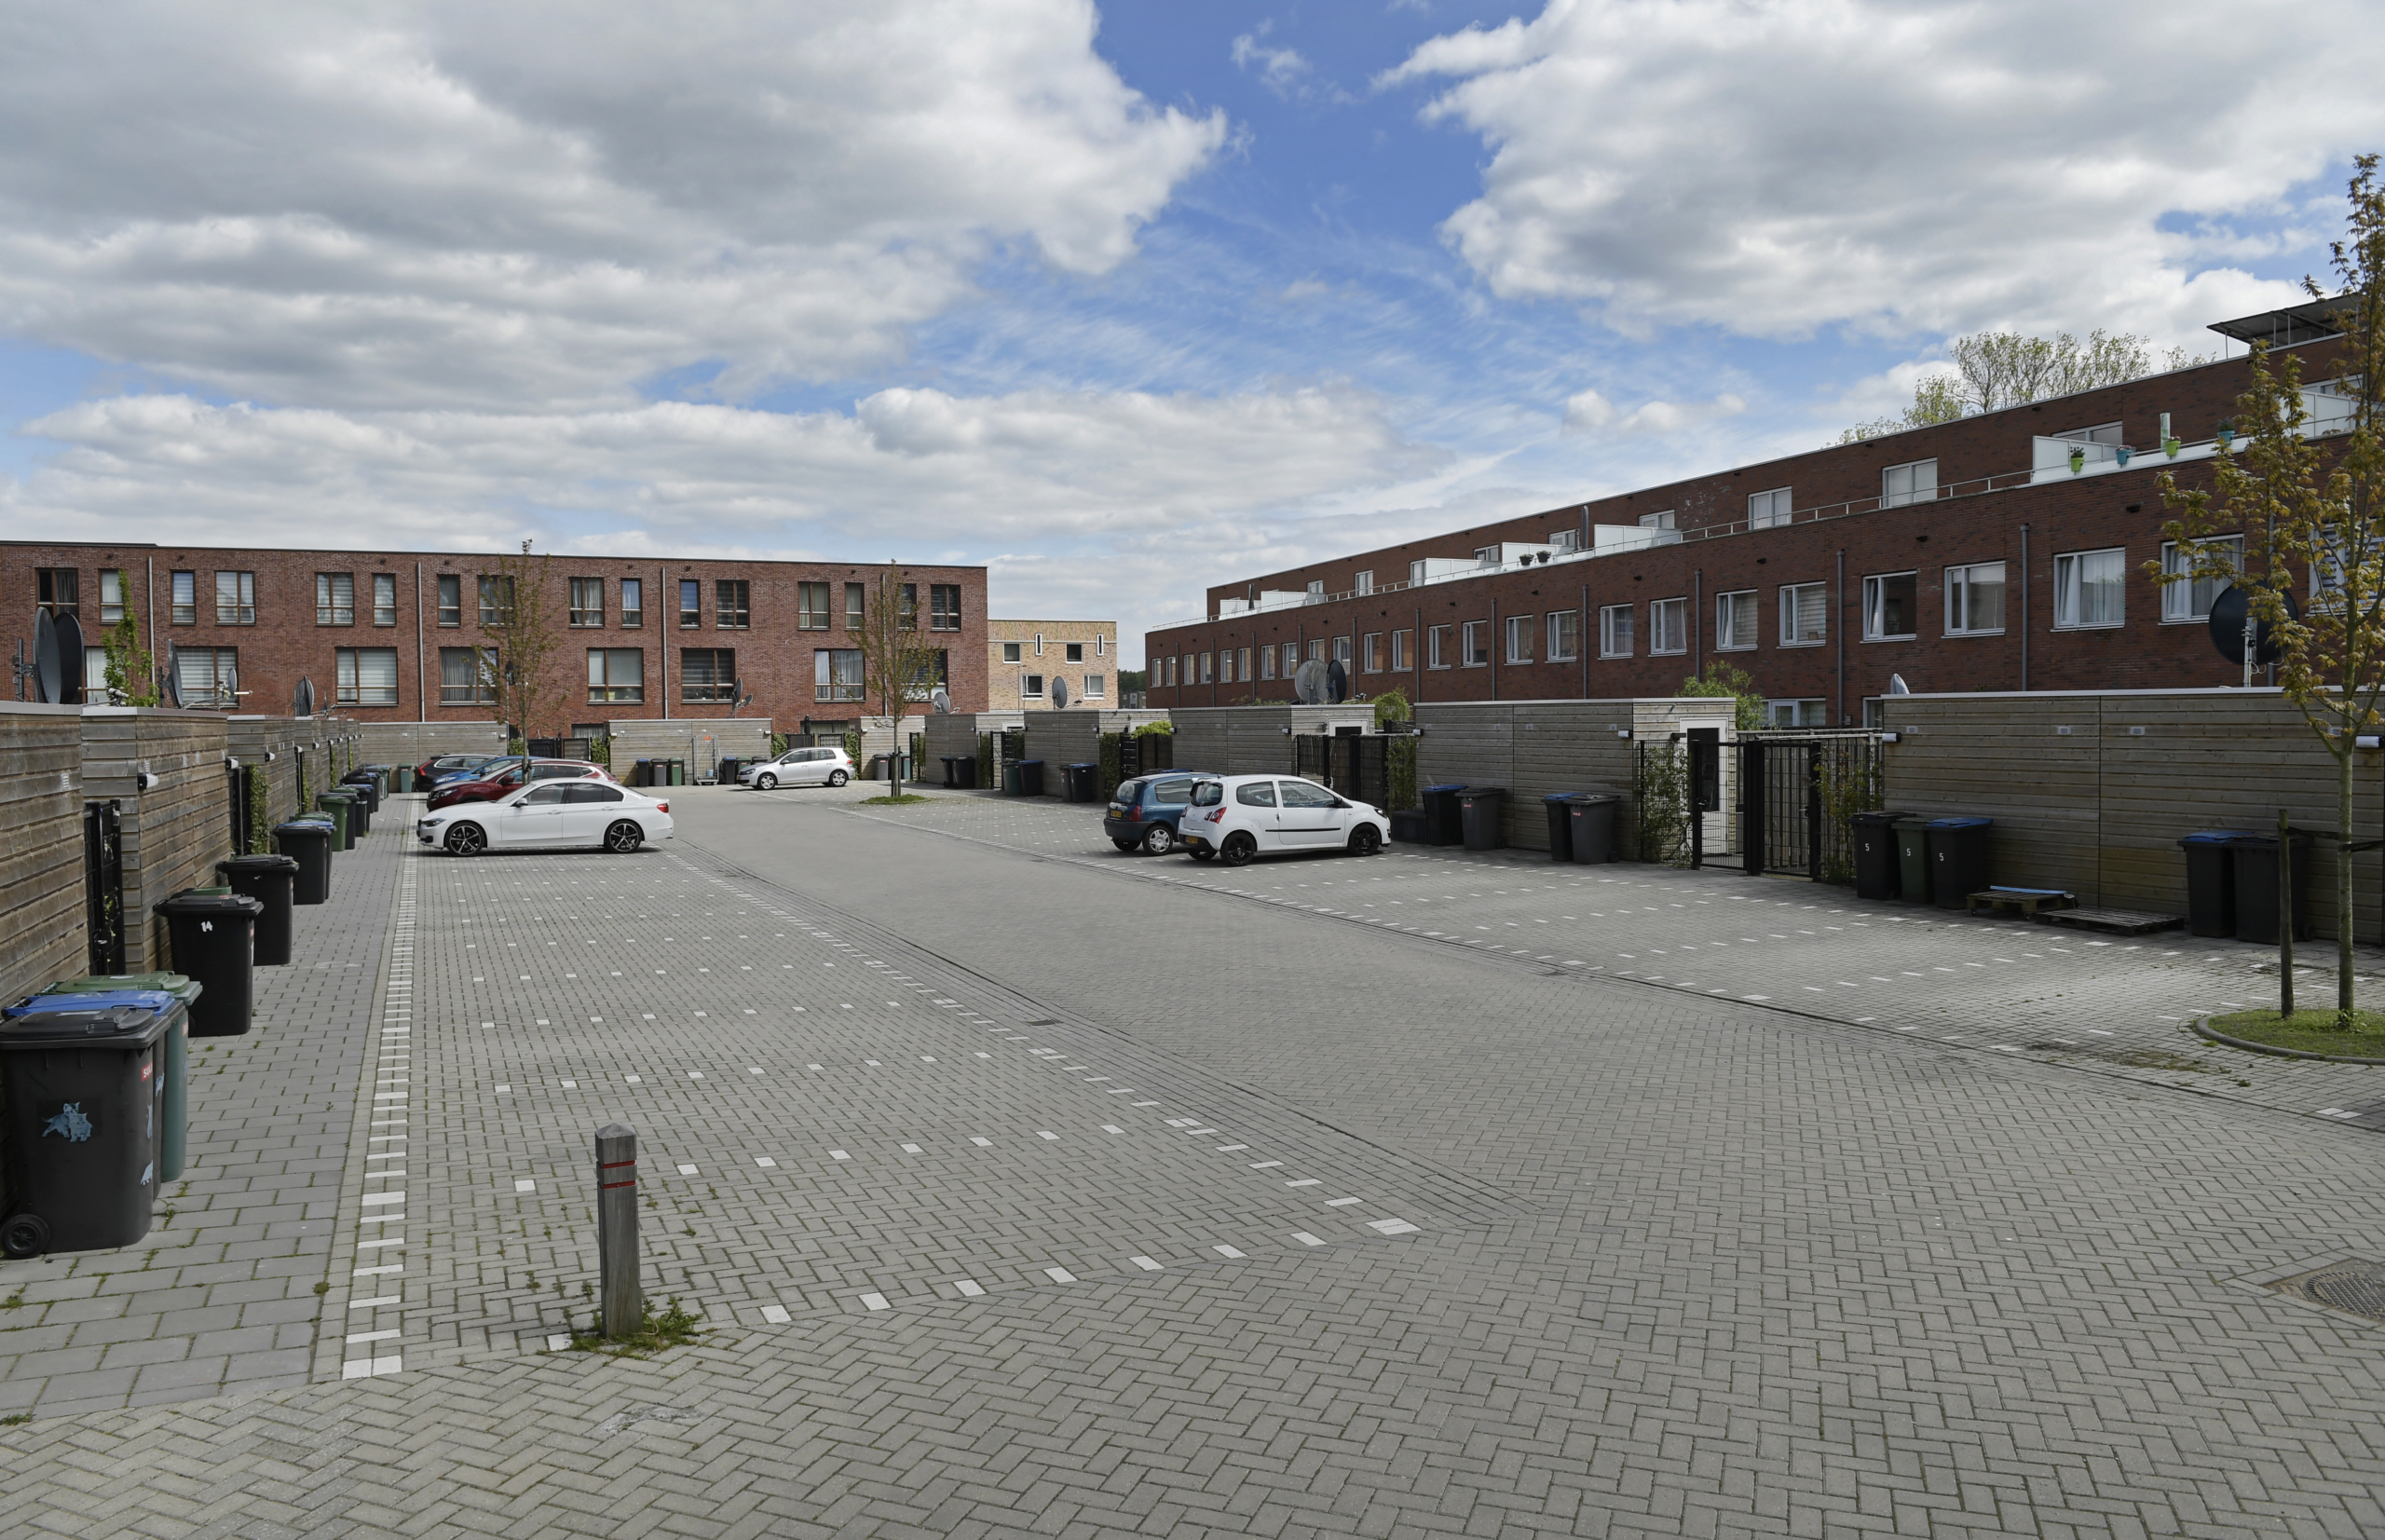 Deltakwartier-Arnhem-170709-347-2-scaled-aspect-ratio-1920-1240